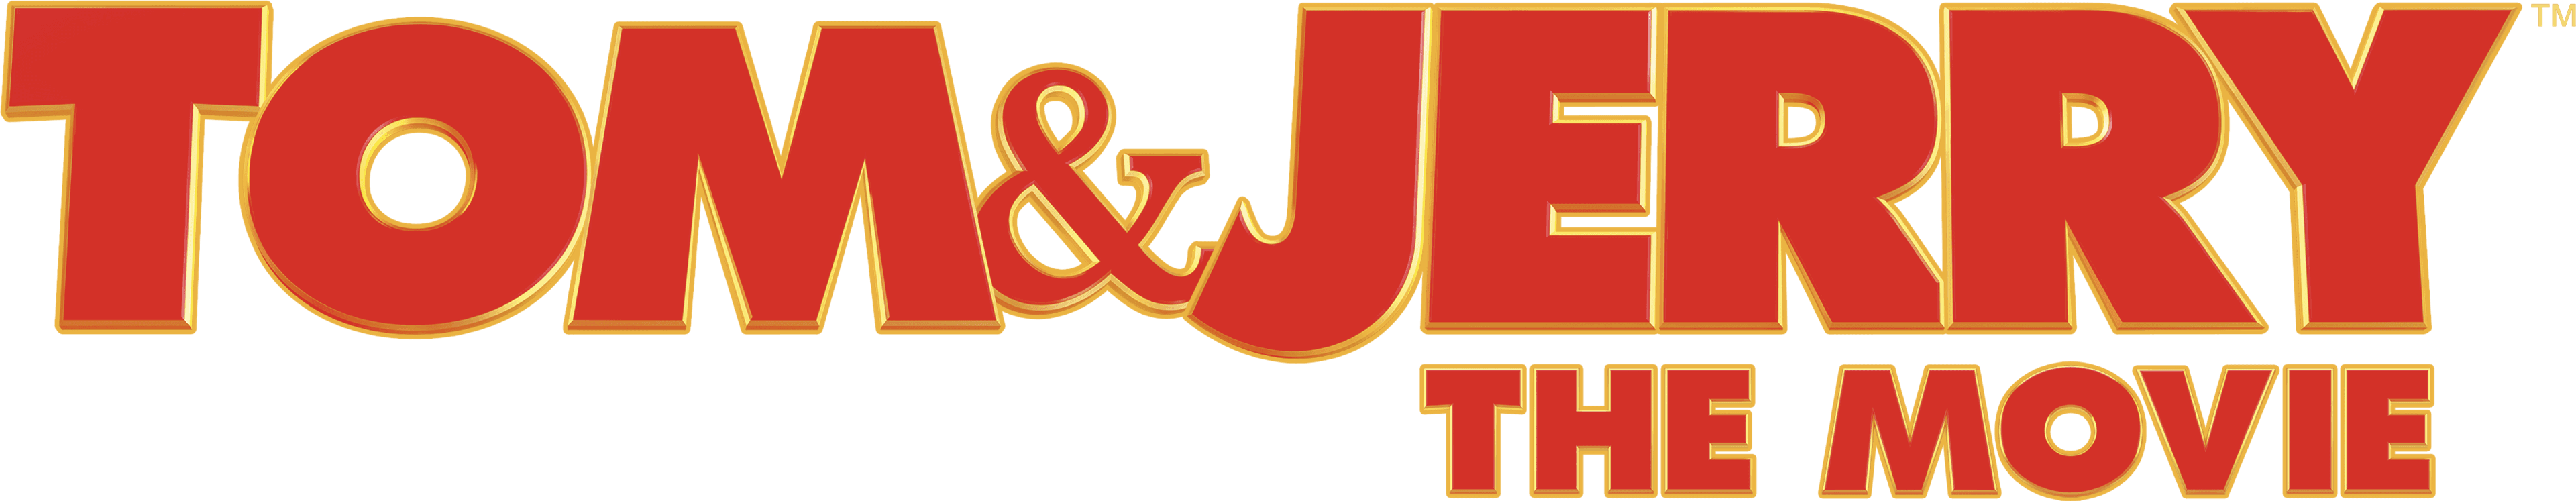 Tom & Jerry logo